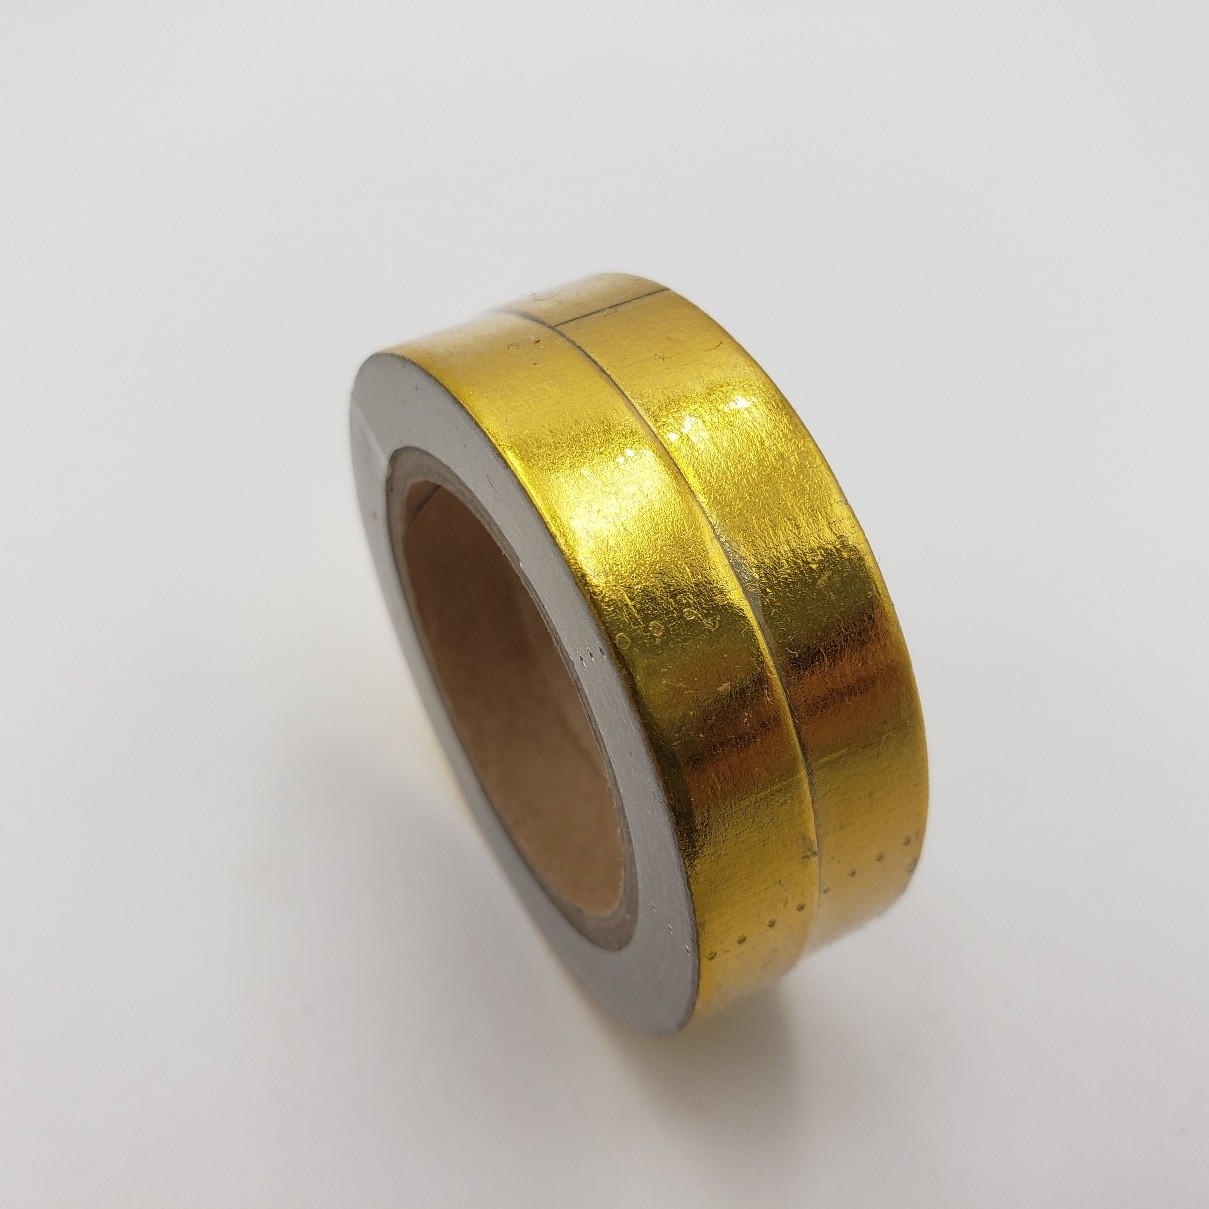 Altenew - Washi Tape - Gold Foil 0.2 Washi Tape